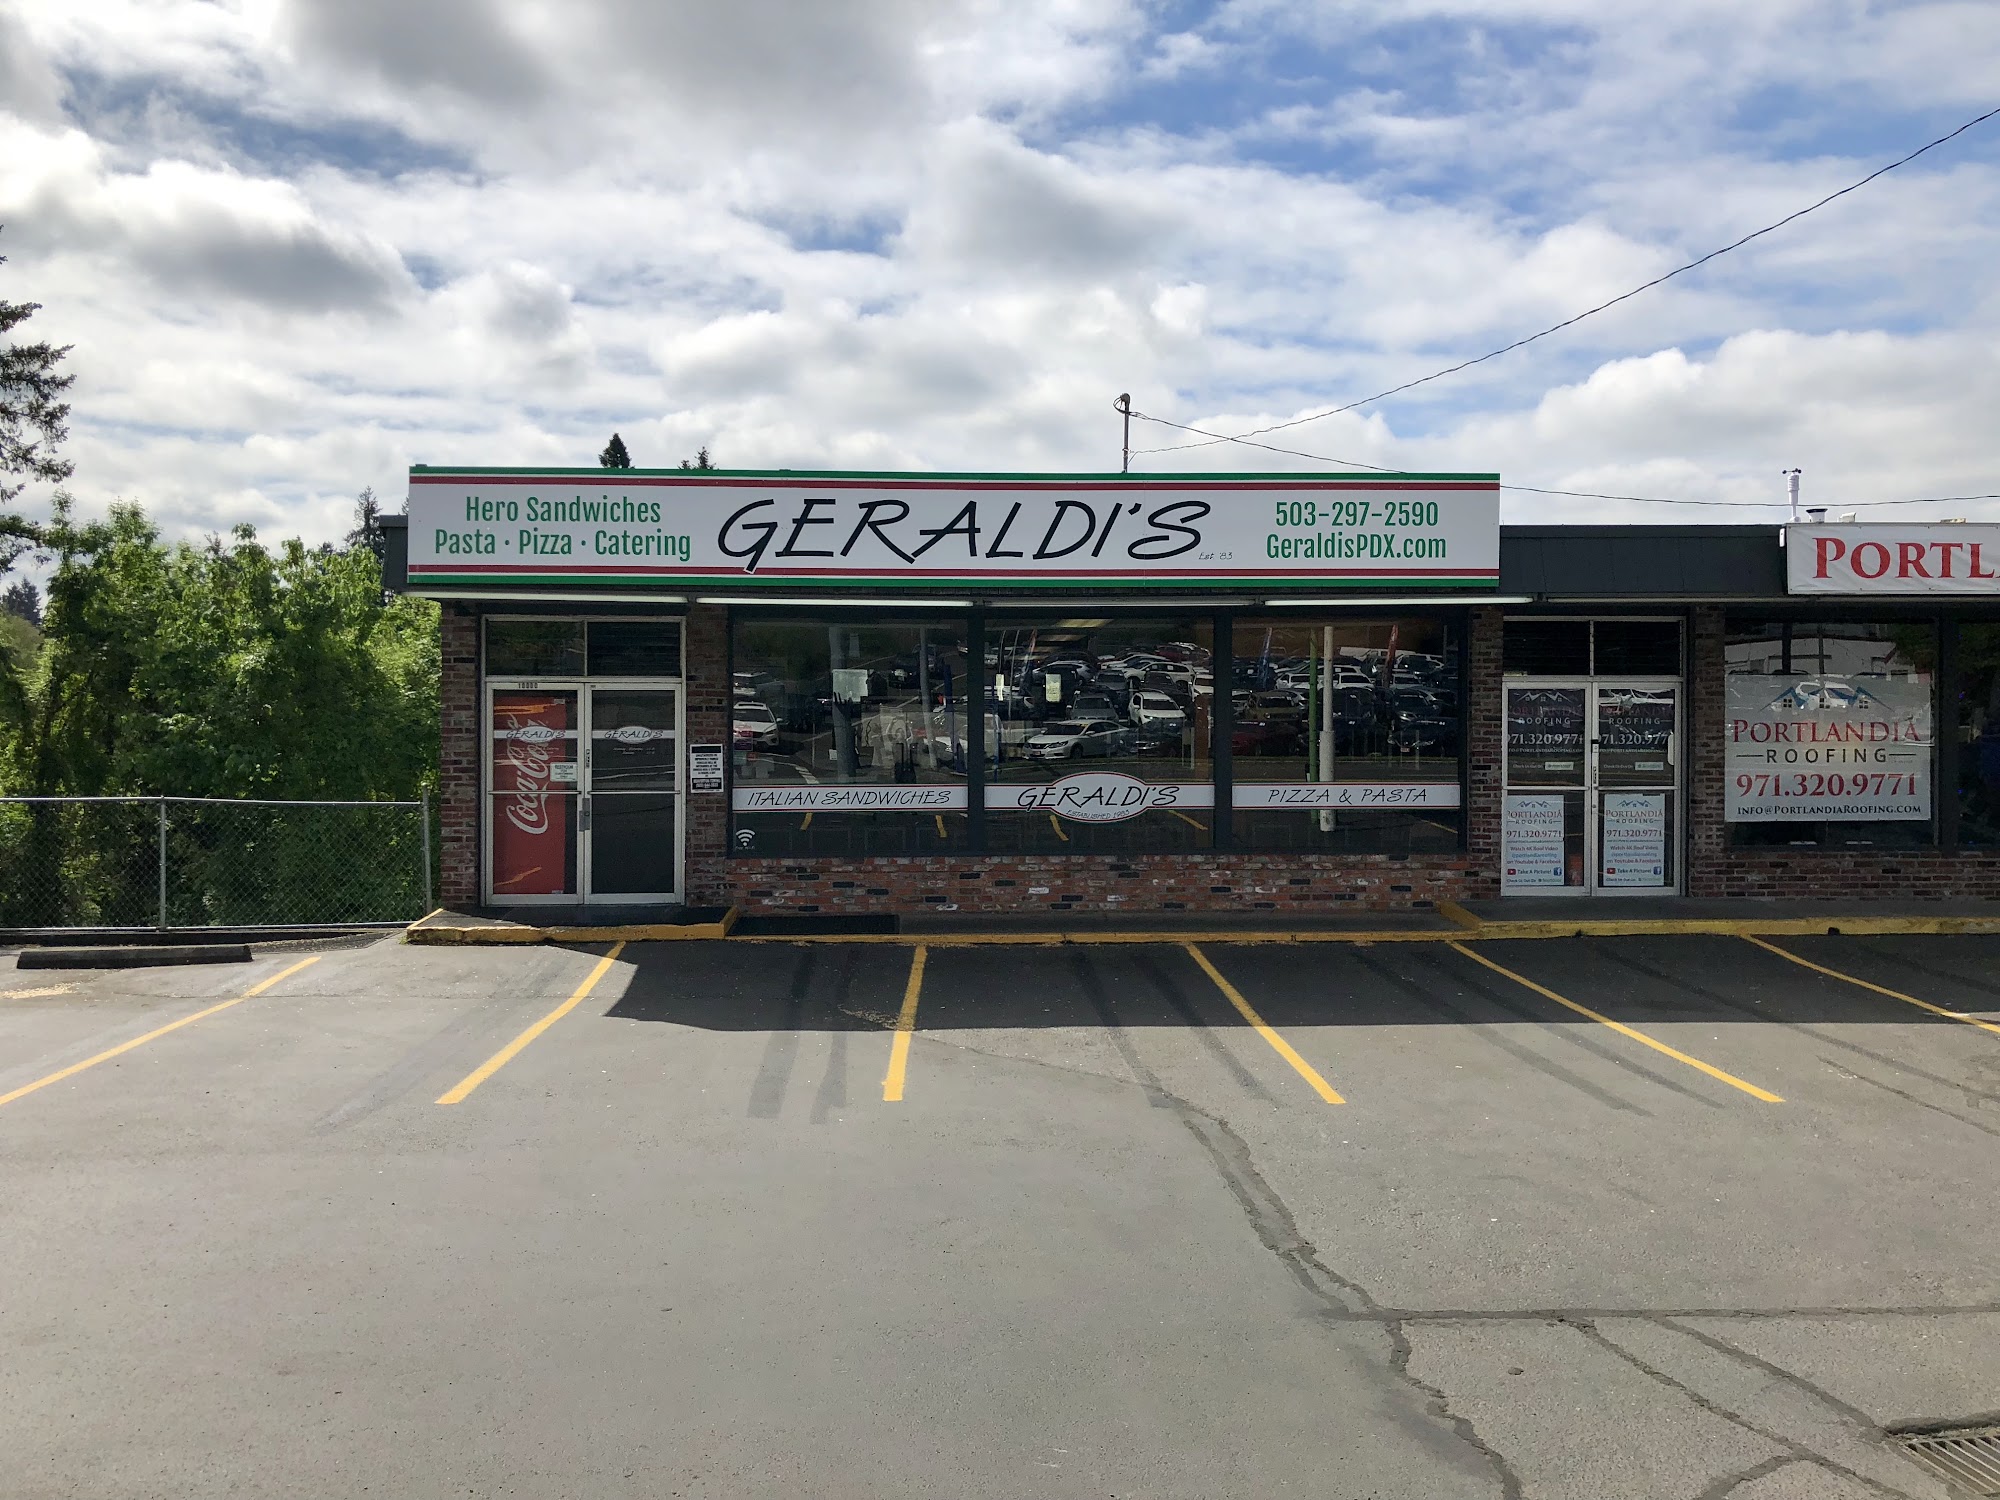 Geraldi's Italian Eating Place